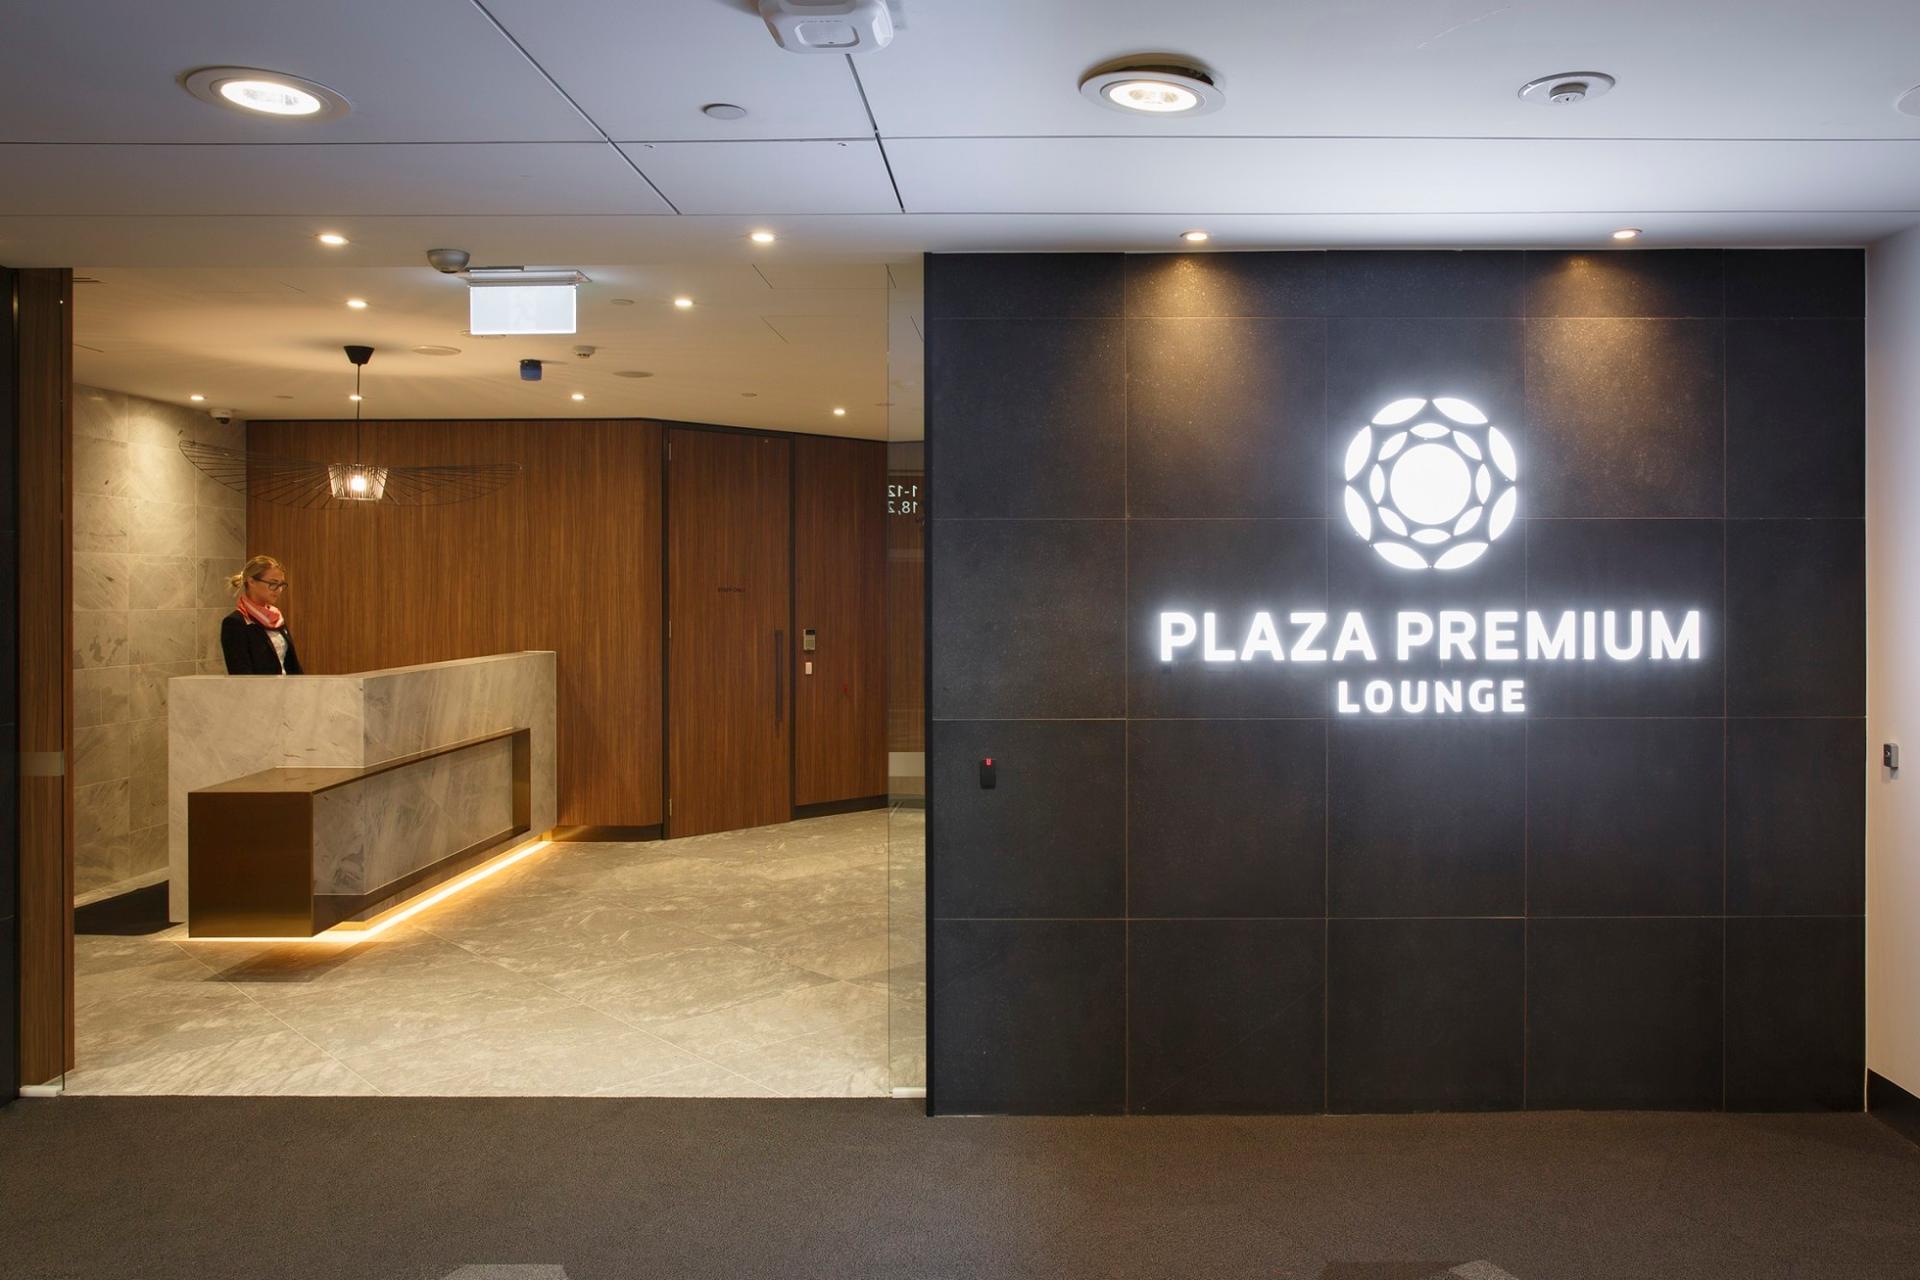 Plaza Premium Lounge image 22 of 33